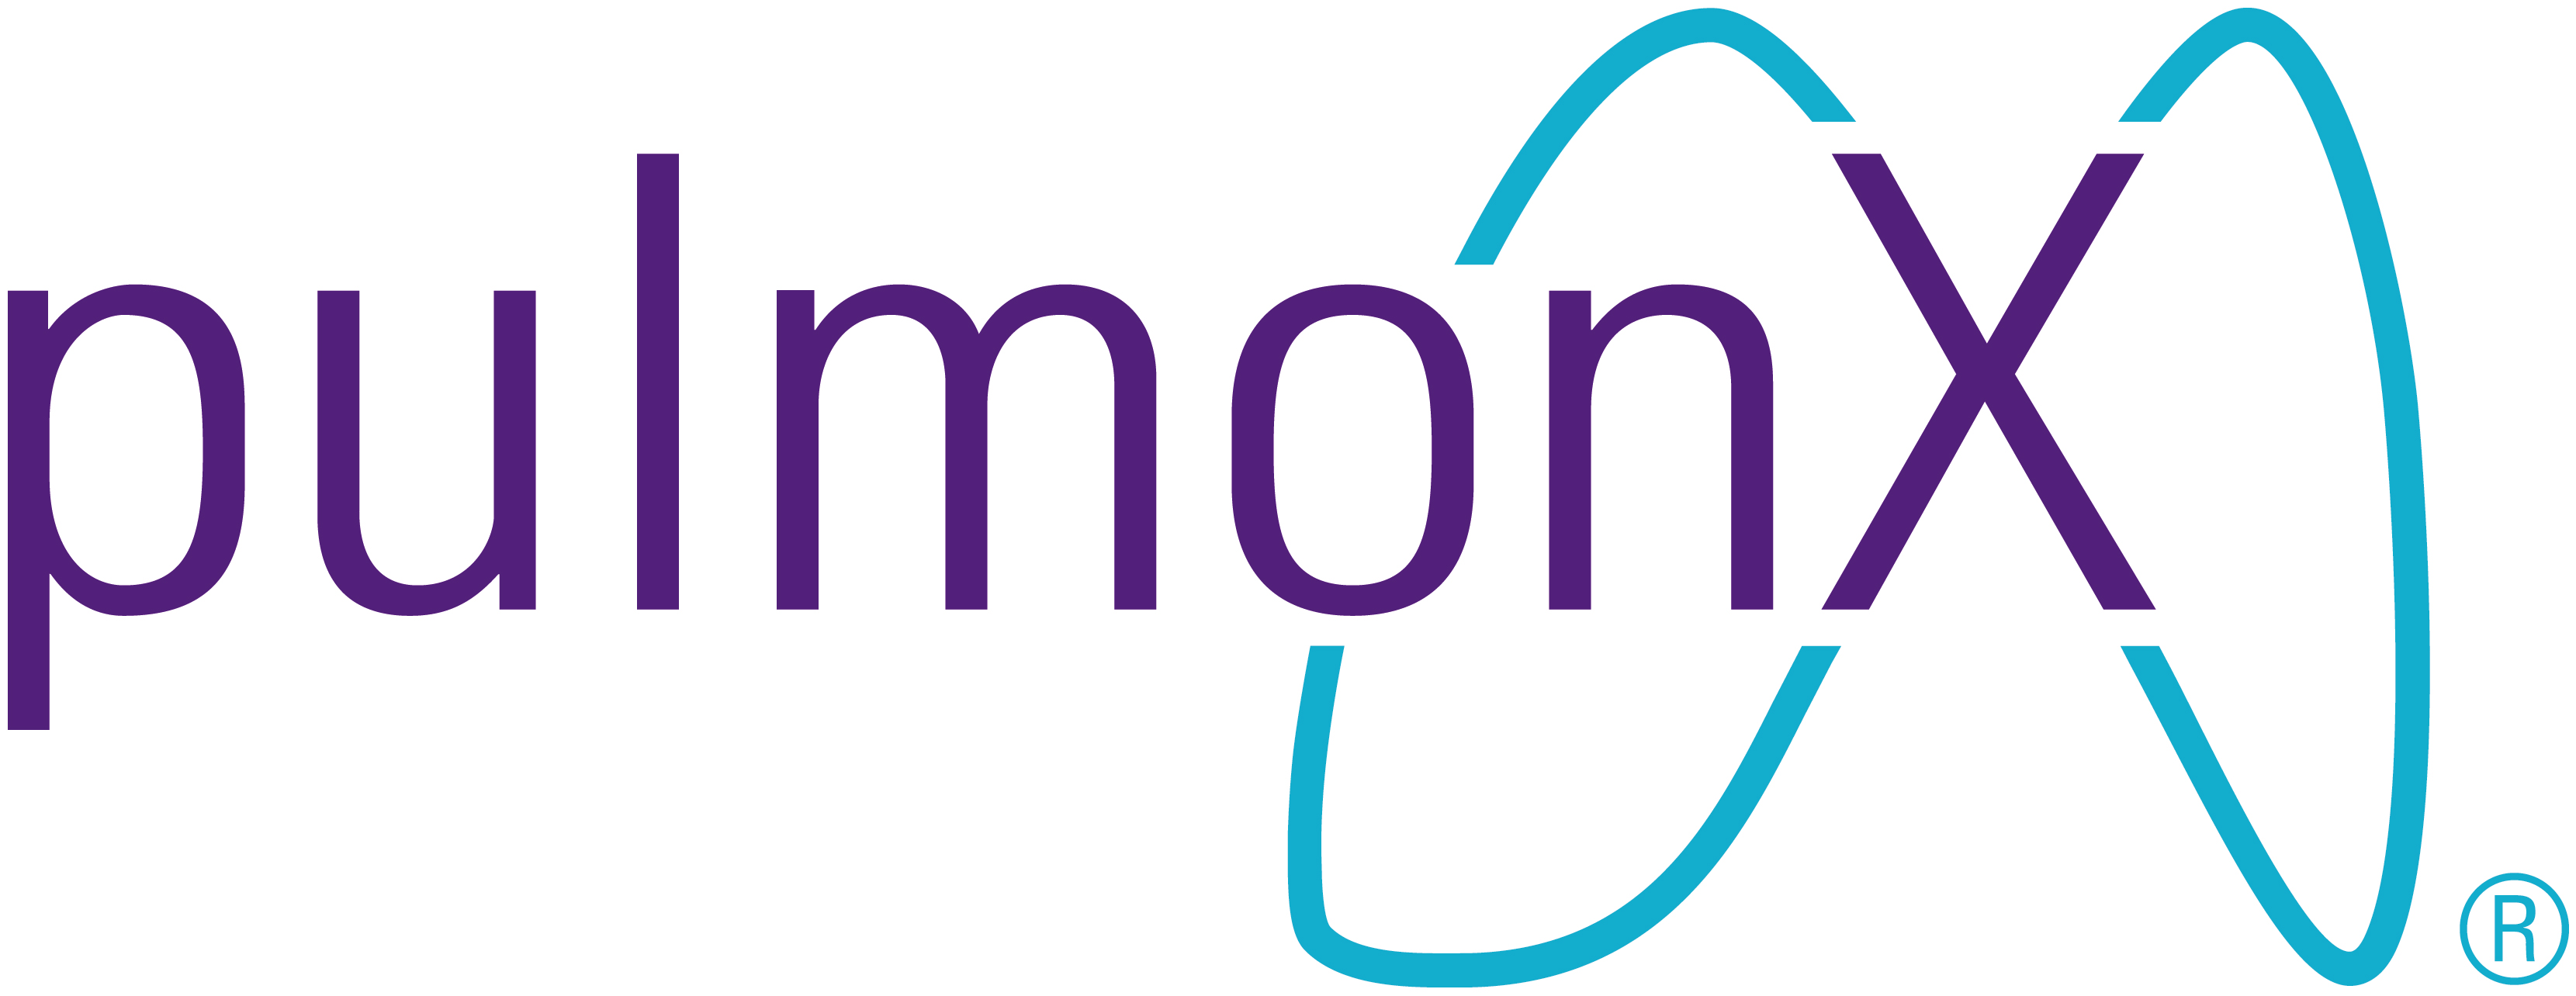 Logo for Pulmonx UK Limited